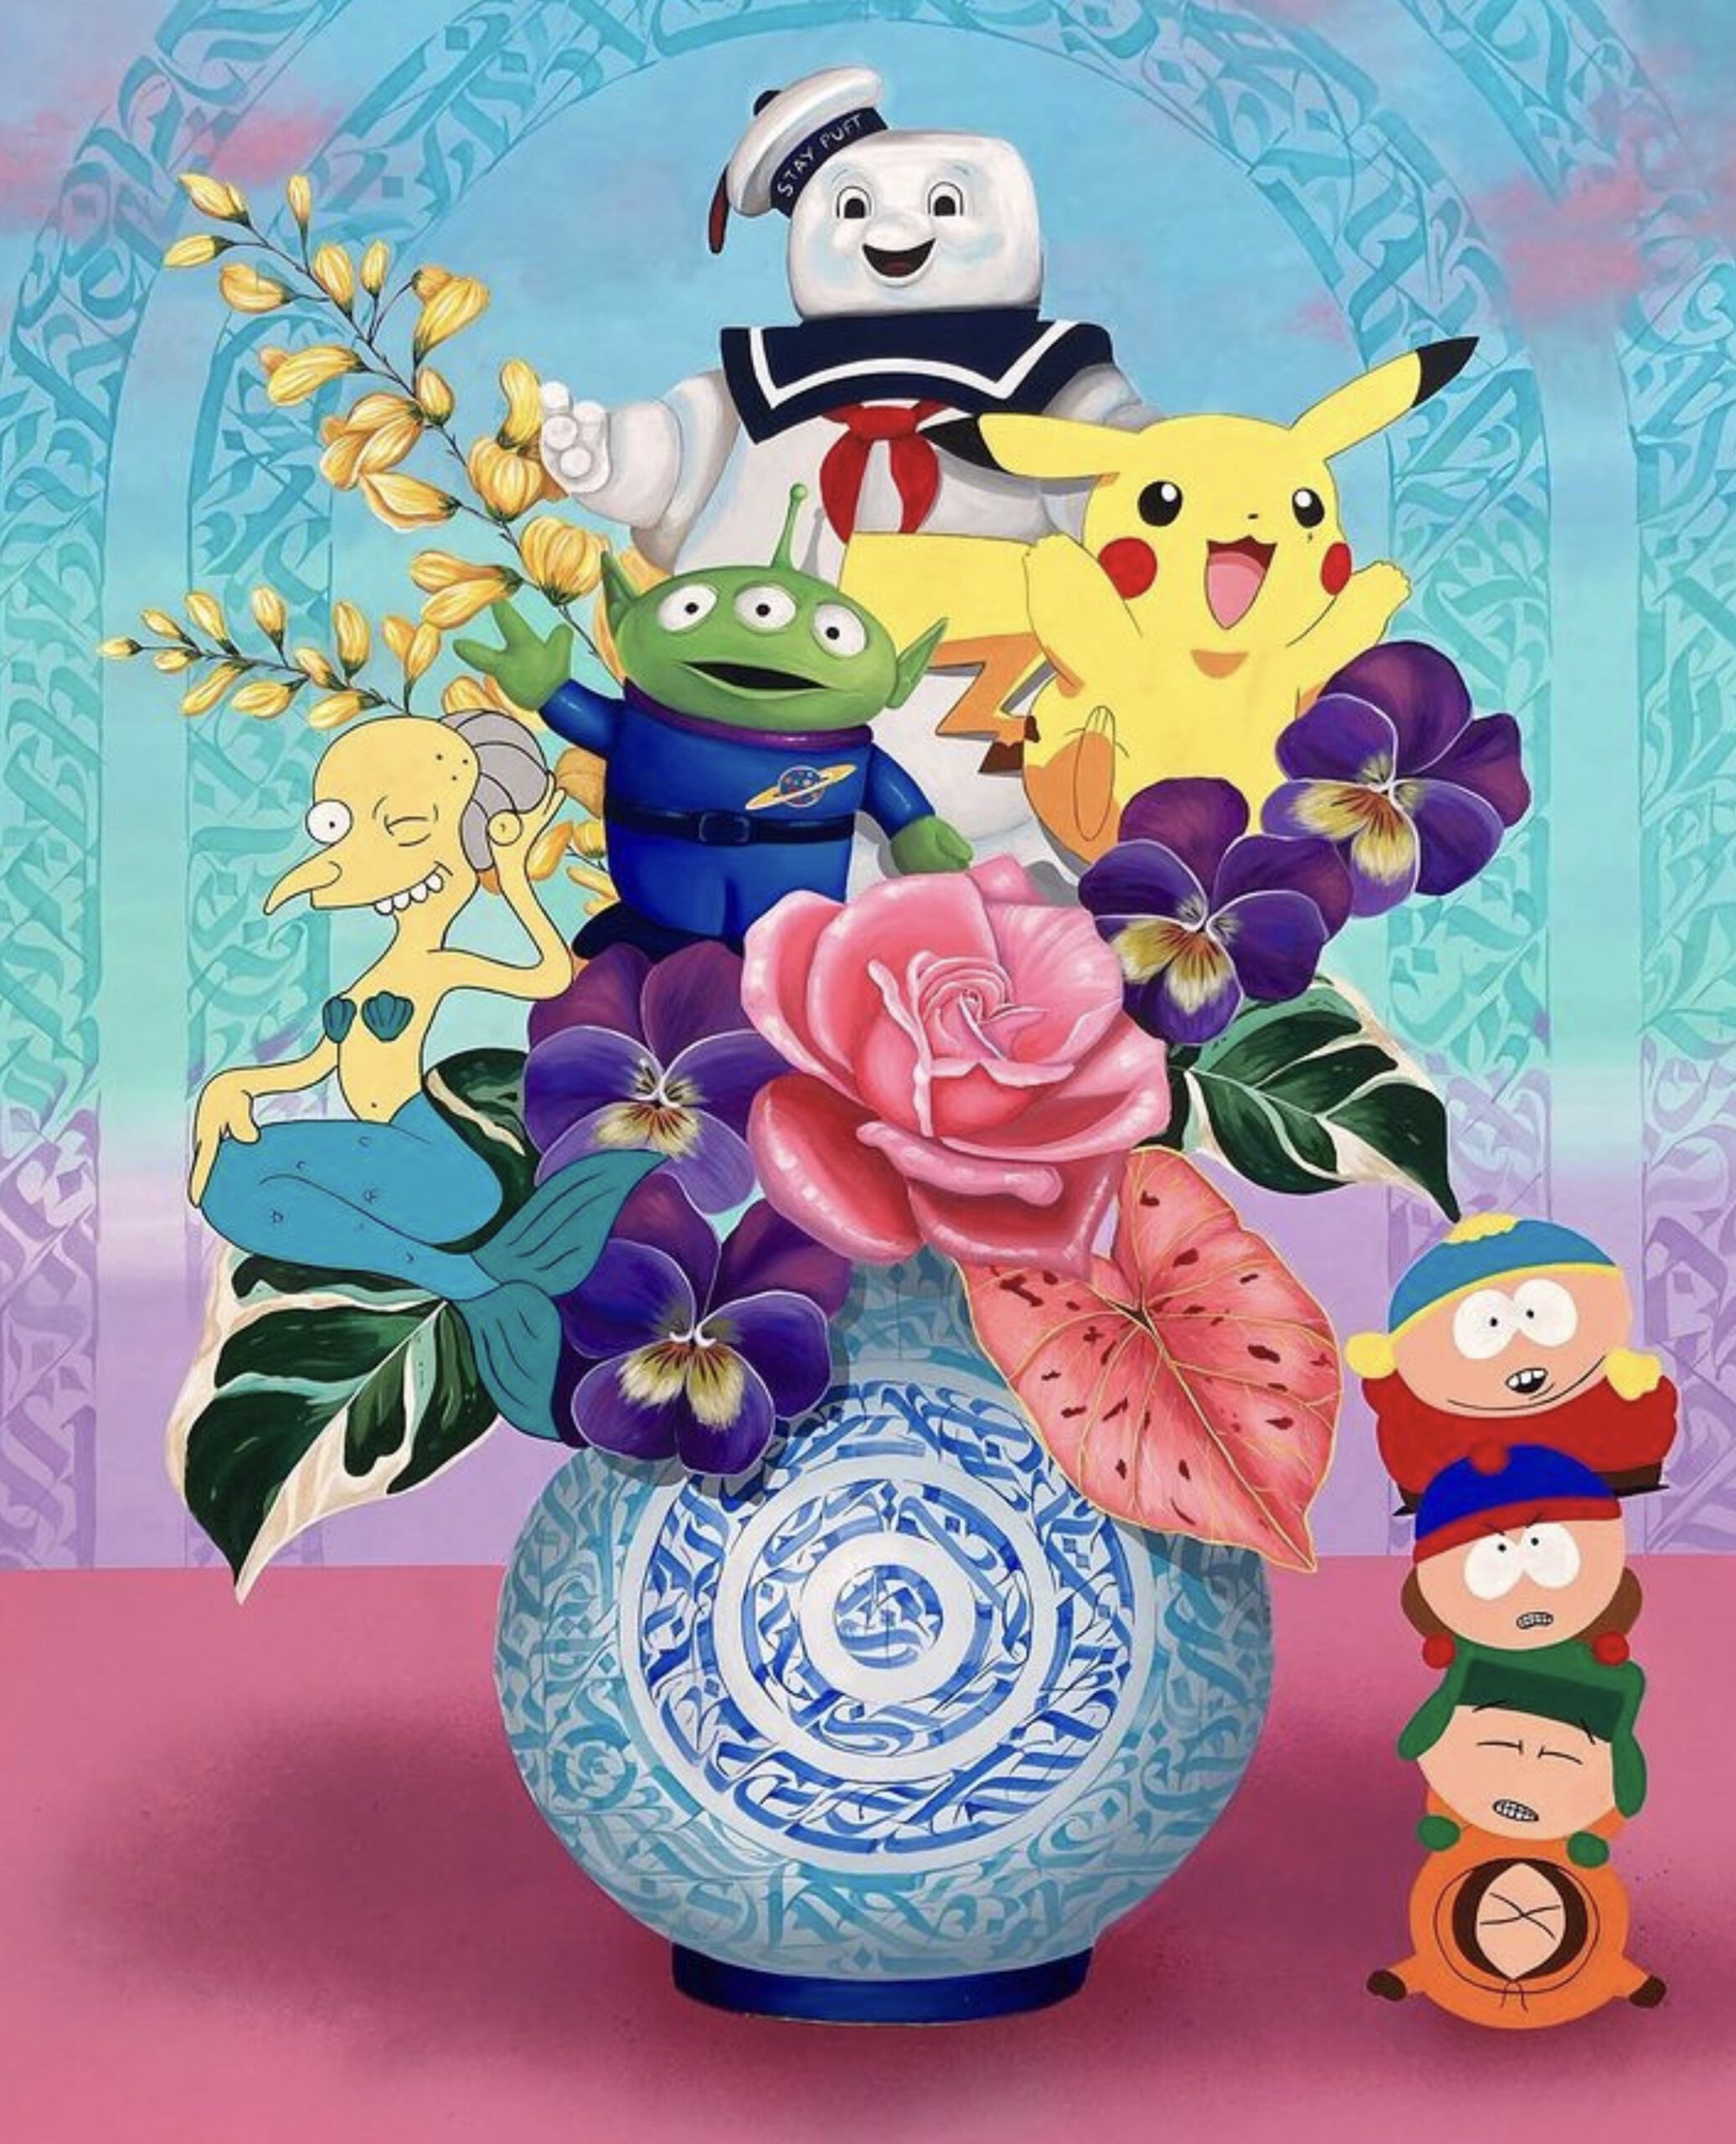 Pikachu’s gypsy wedding